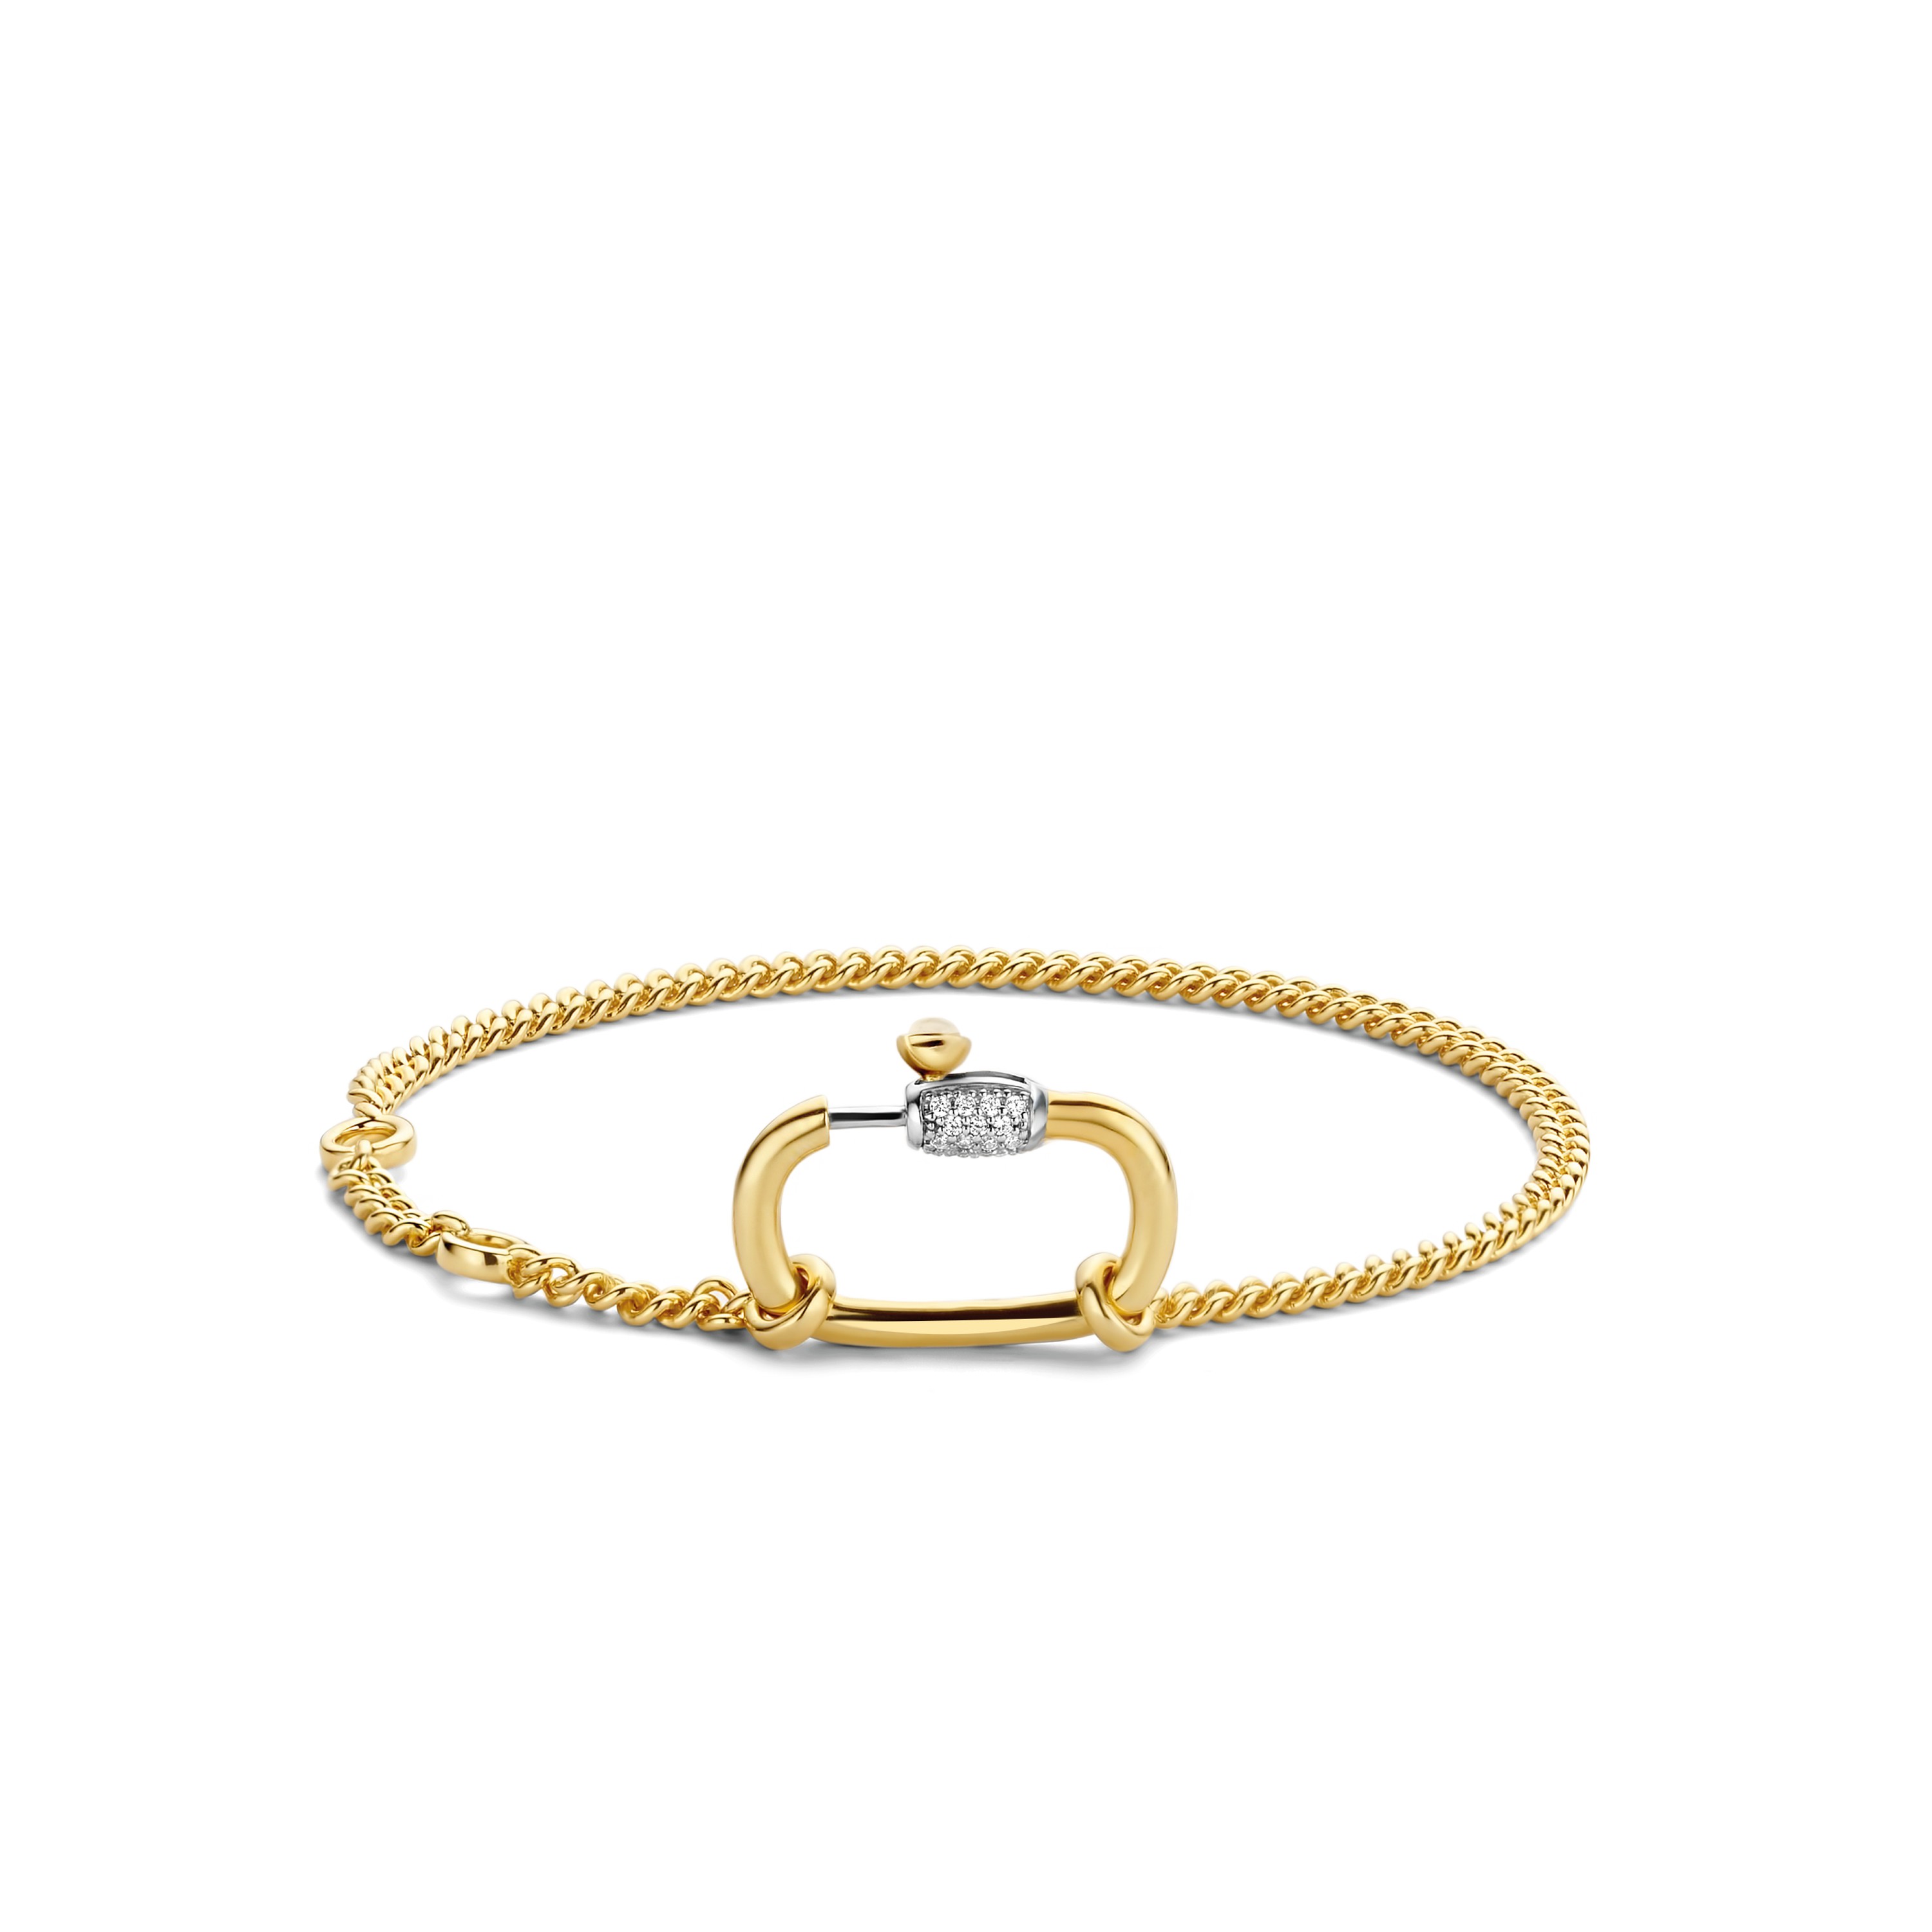 TI SENTO - Milano Bracelet 2962SY Gala Jewelers Inc. White Oak, PA